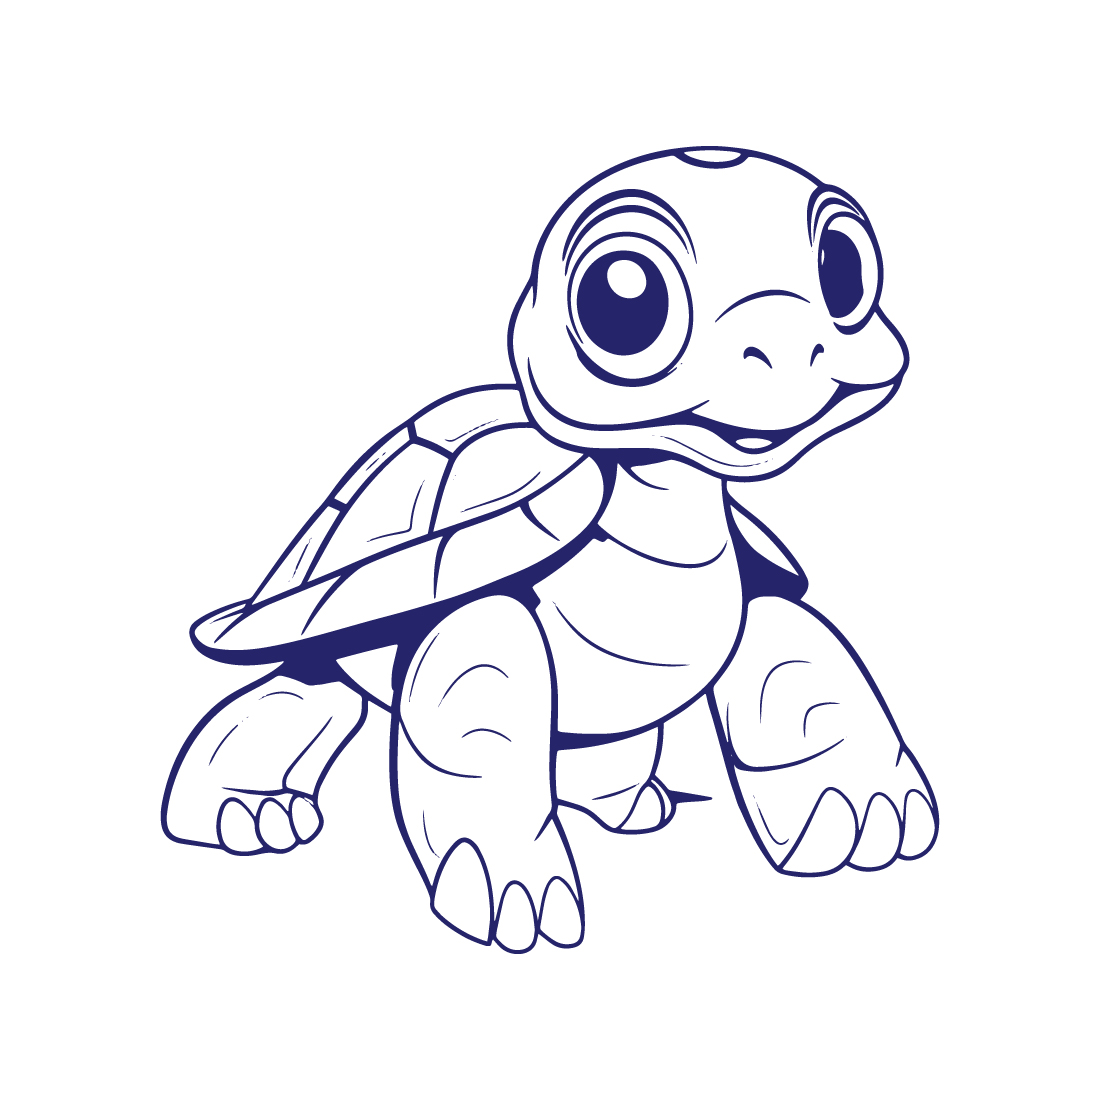 Cute Turtle illustration cover image.